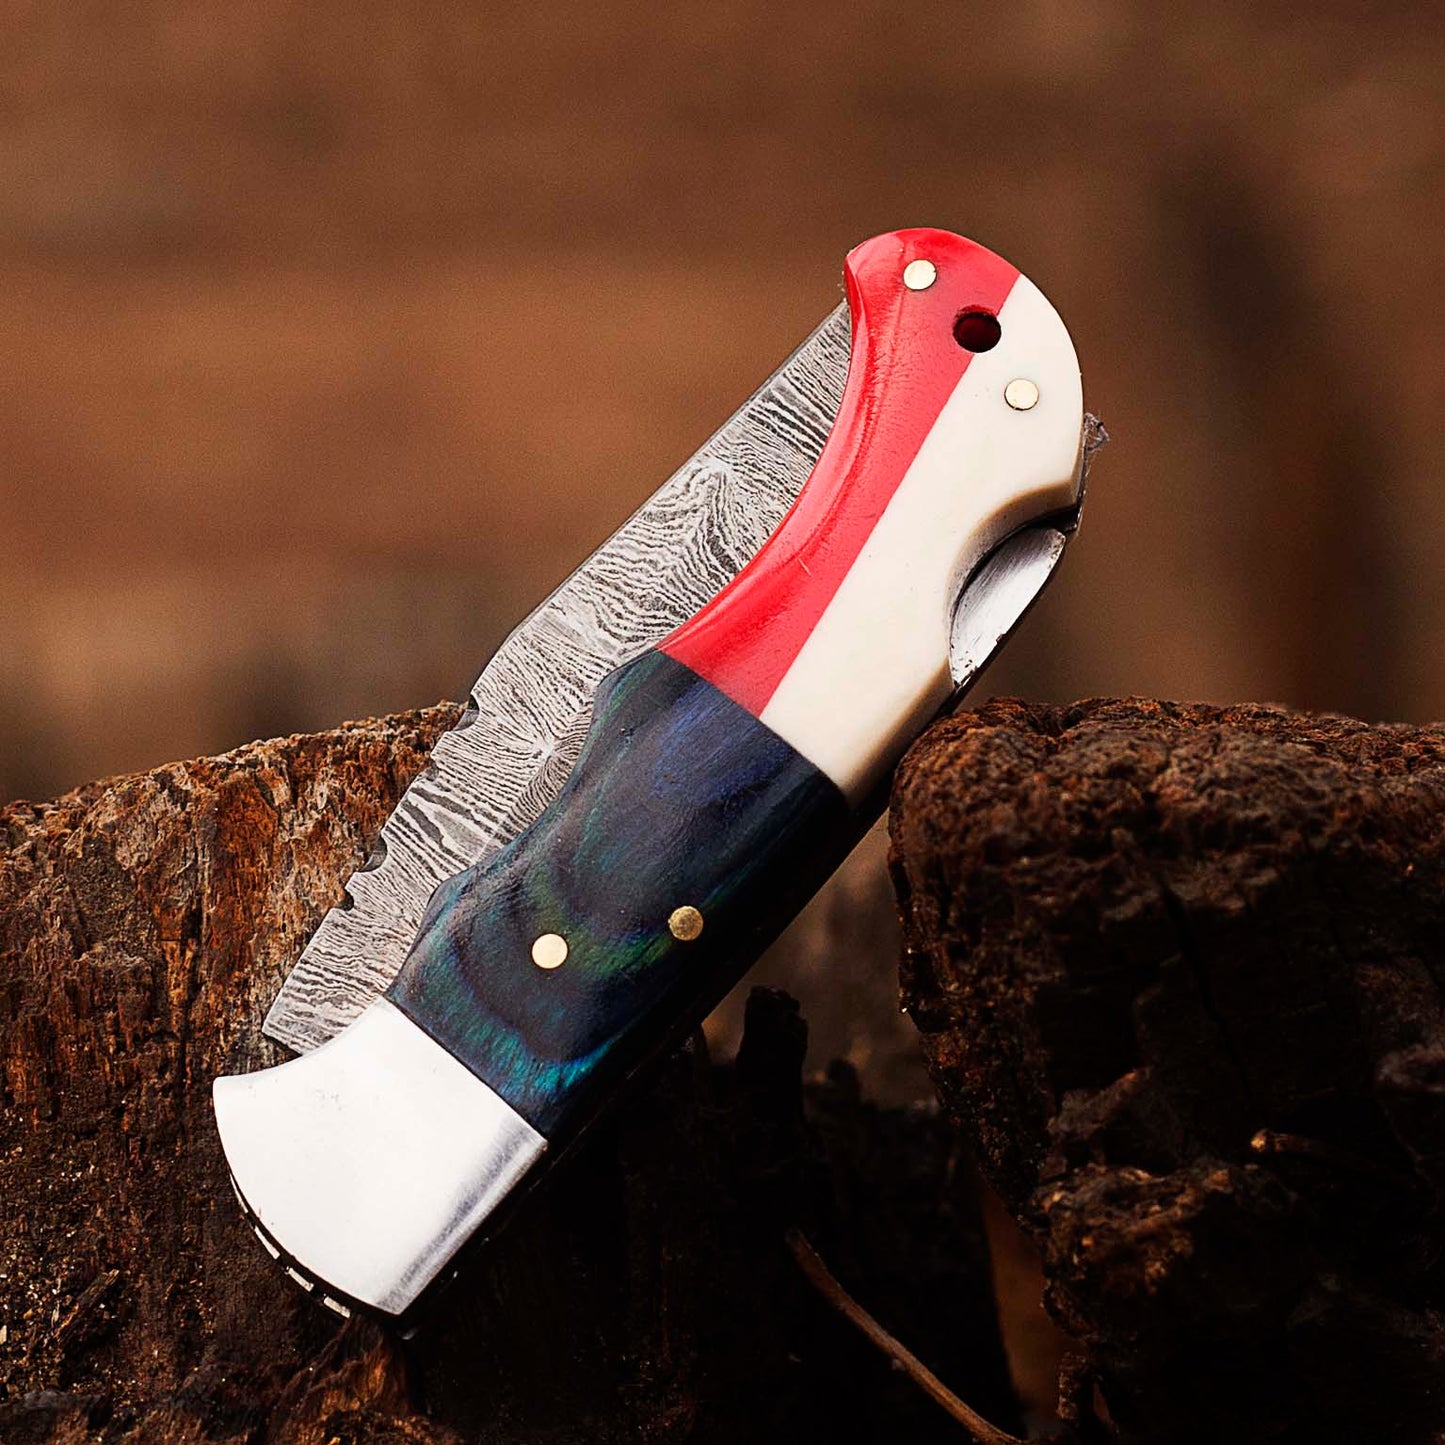 Handmade Damascus Pocket Knife, Texas Flag Folding Knife, Outdoor Survival Knife With Leather Sheath - Groomsmen Gift, Anniversary Gift